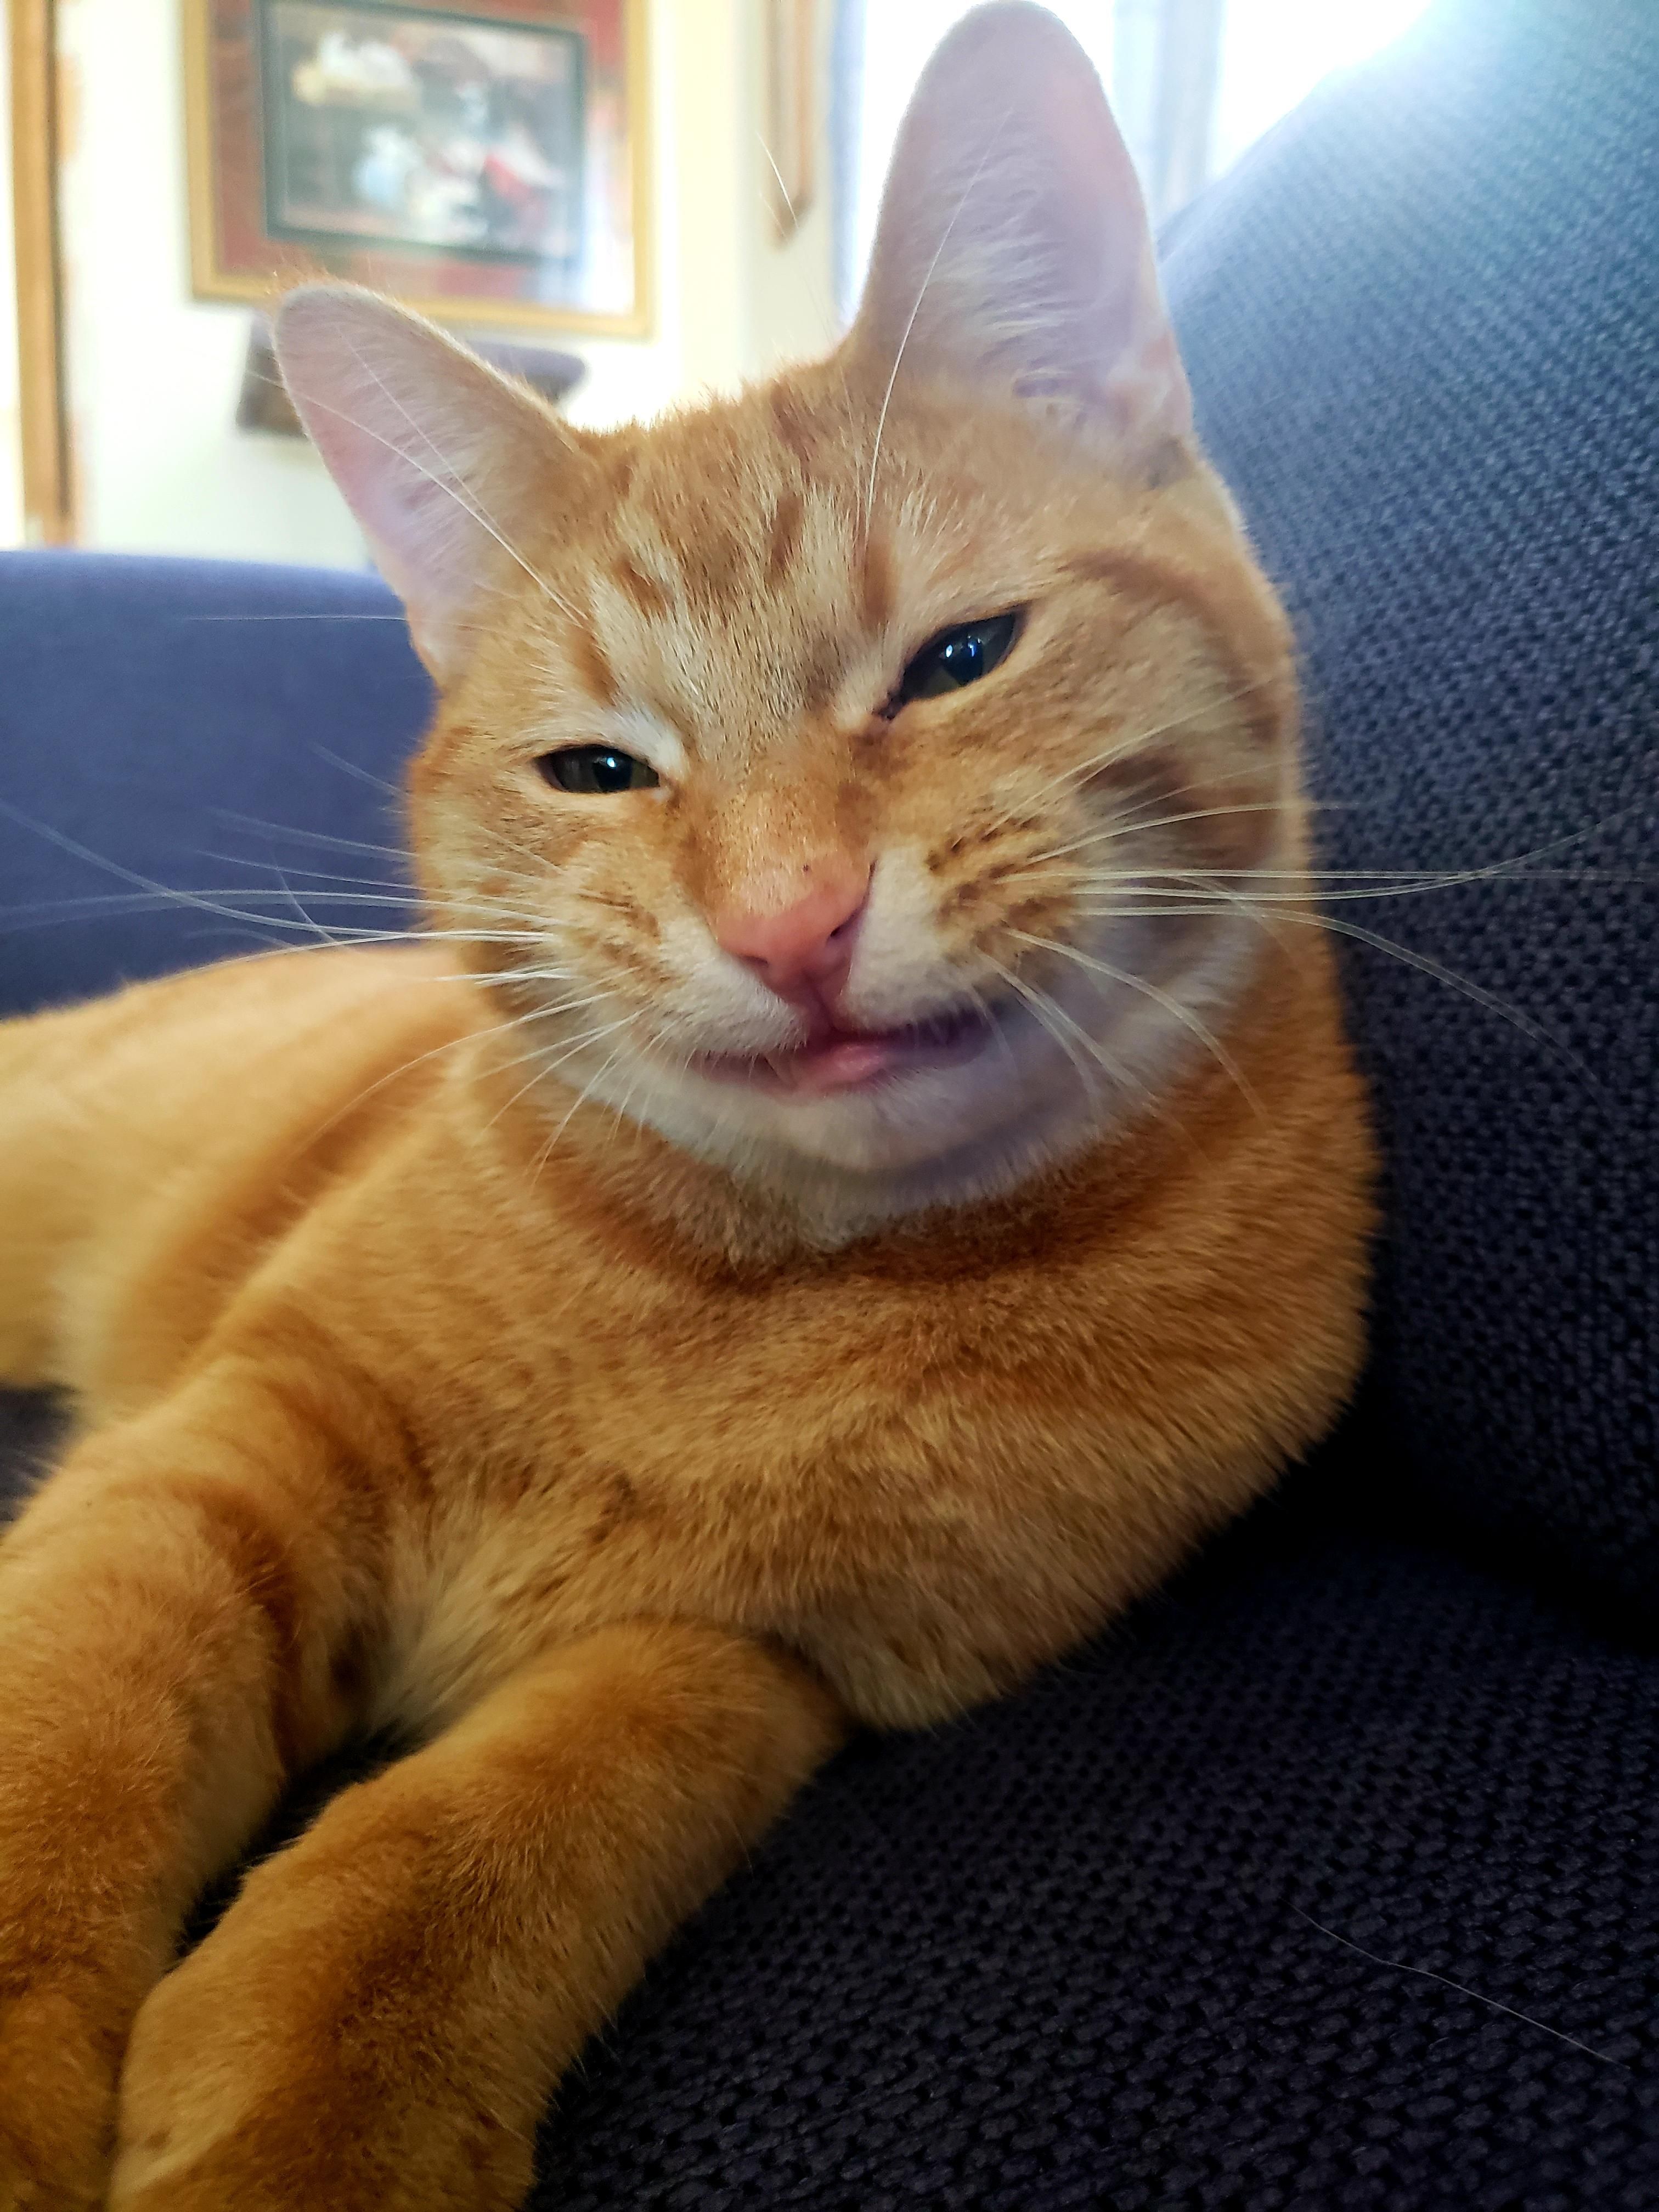 Winston says " cheese!"